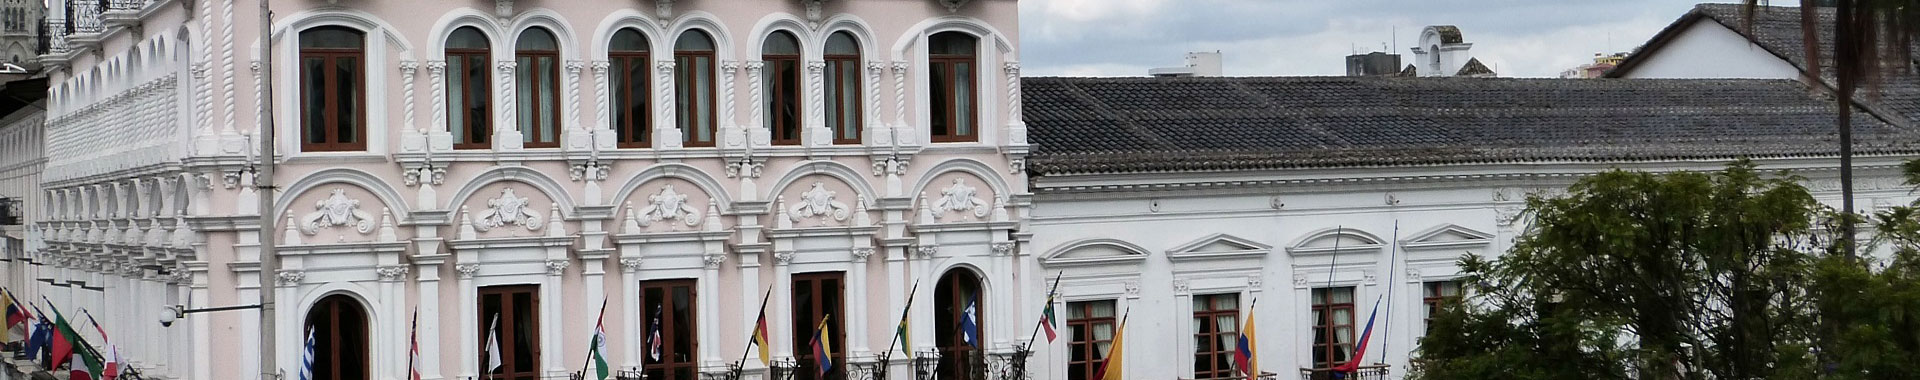 Ecuador - Quito - Hoteles - Plaza Grande